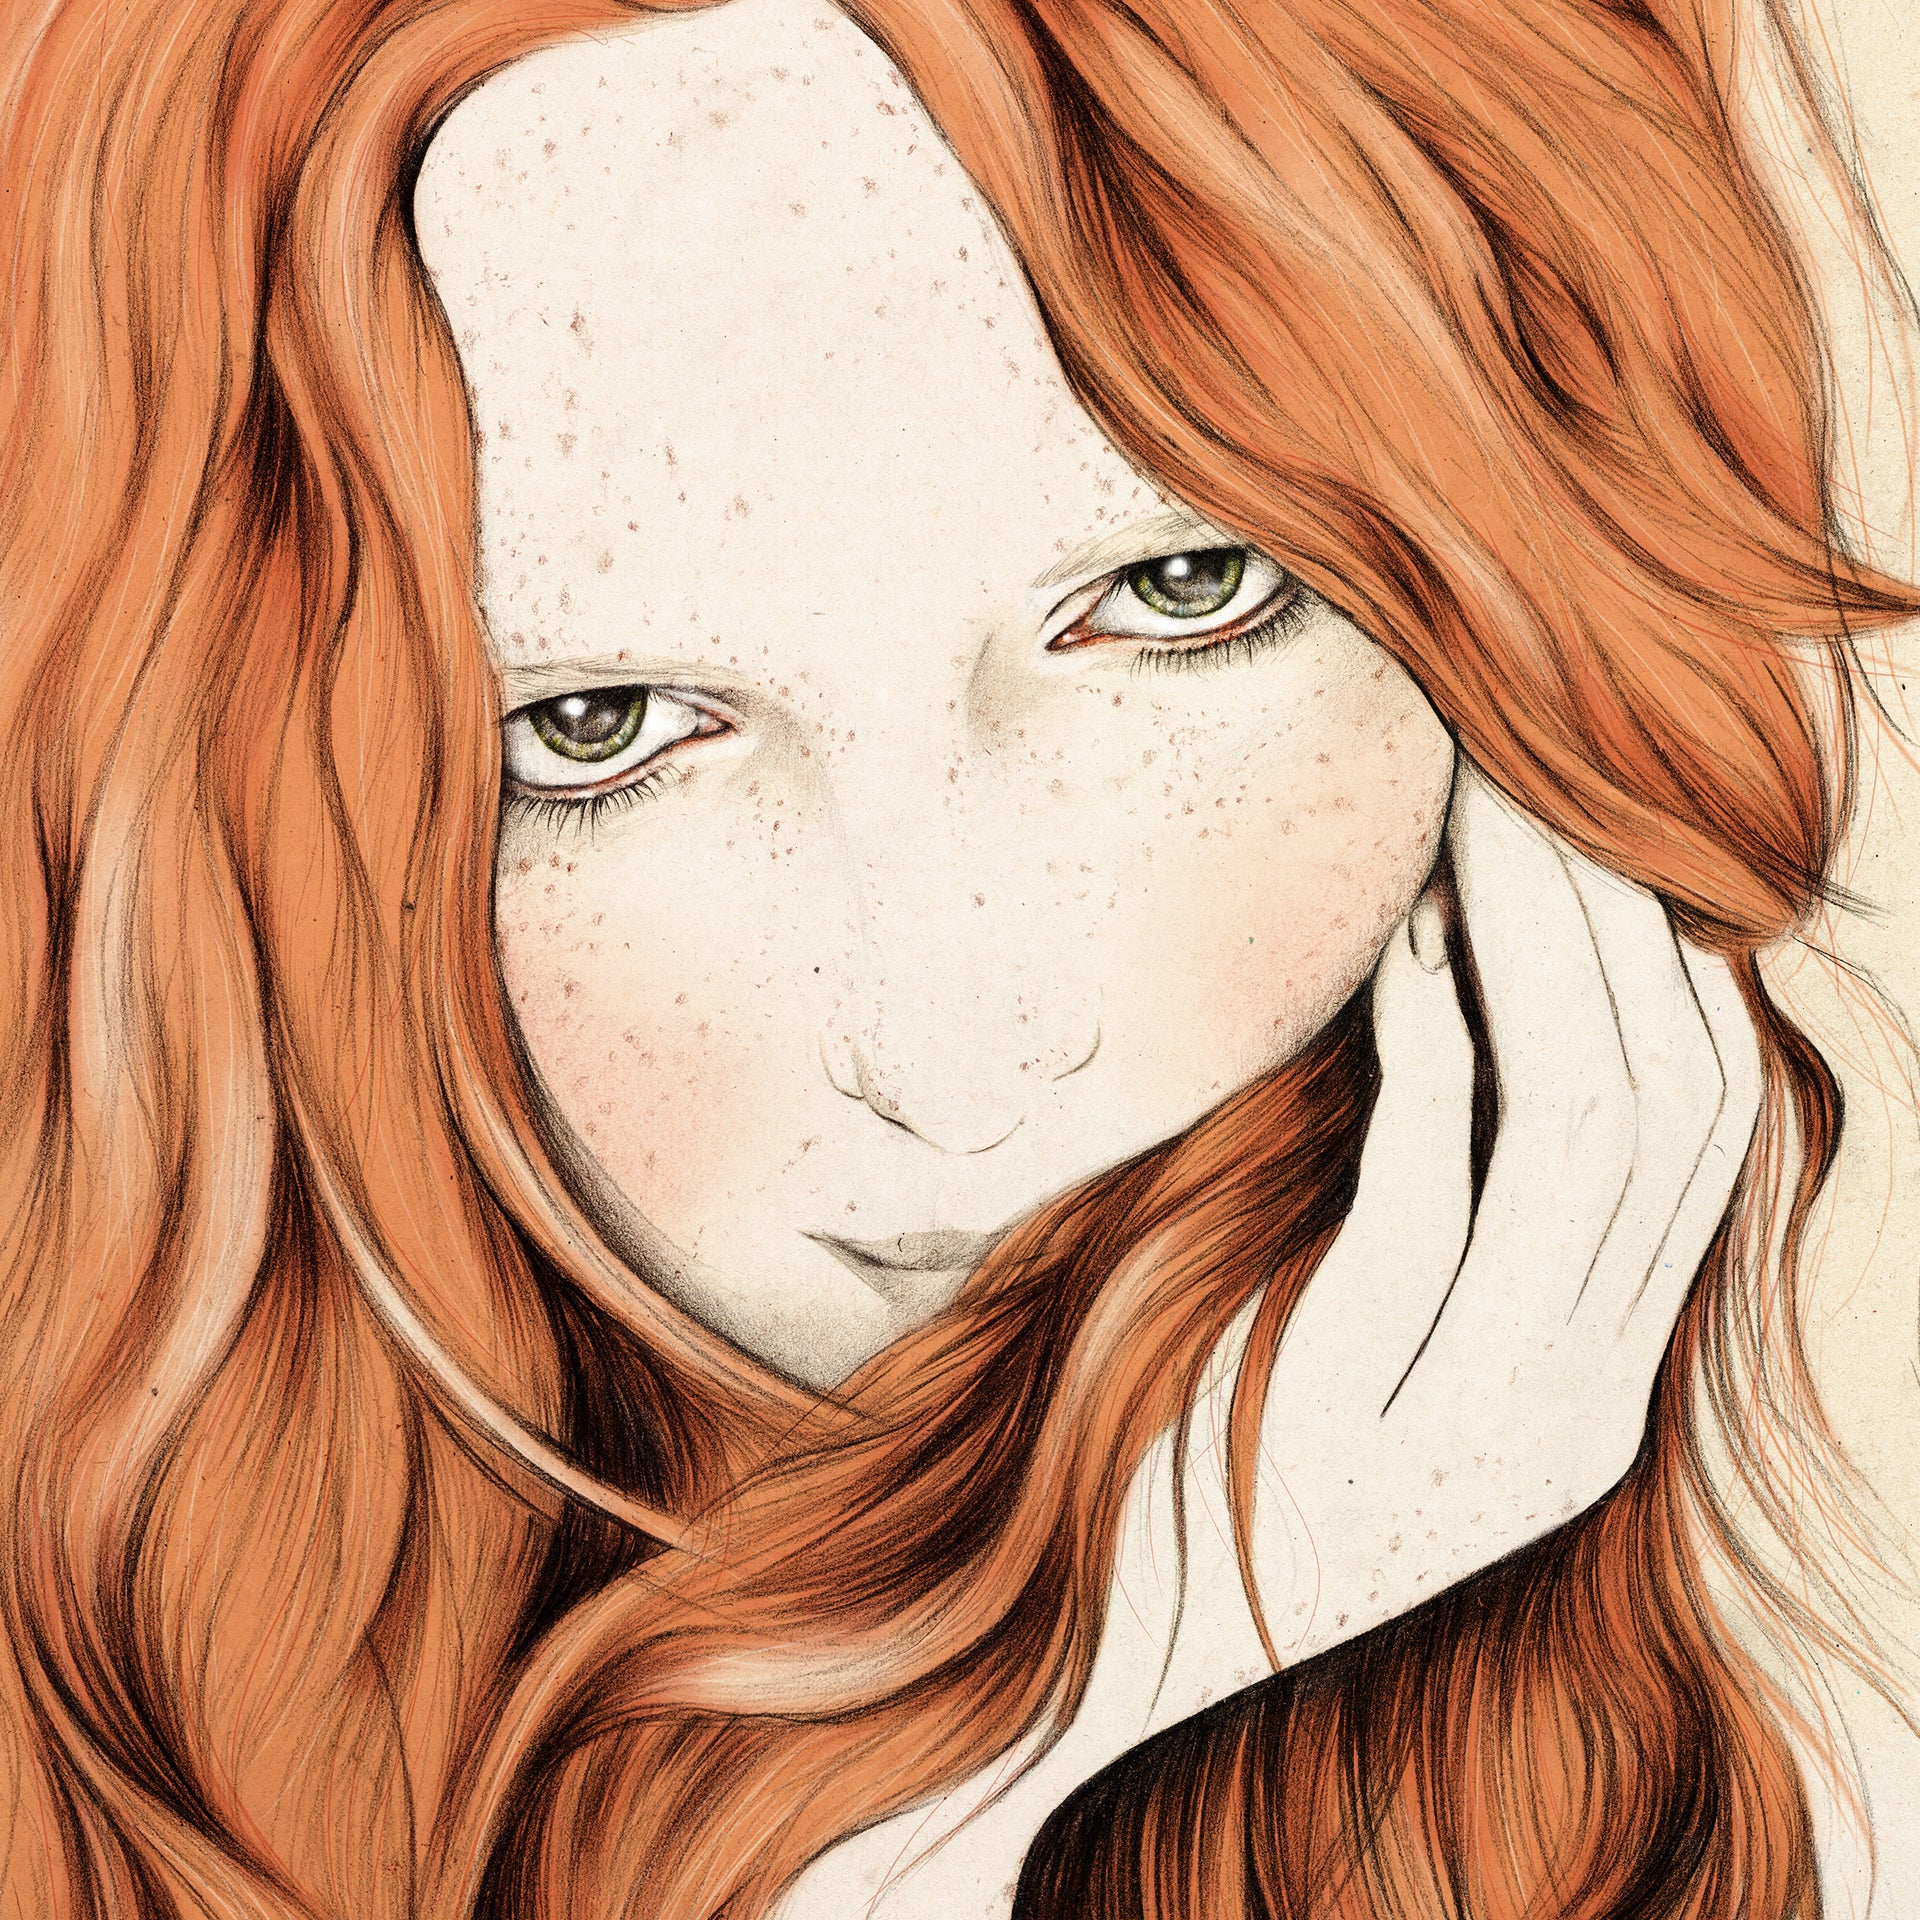 Girl illustration commission by Melbourne based illustrator Kelly Thompson